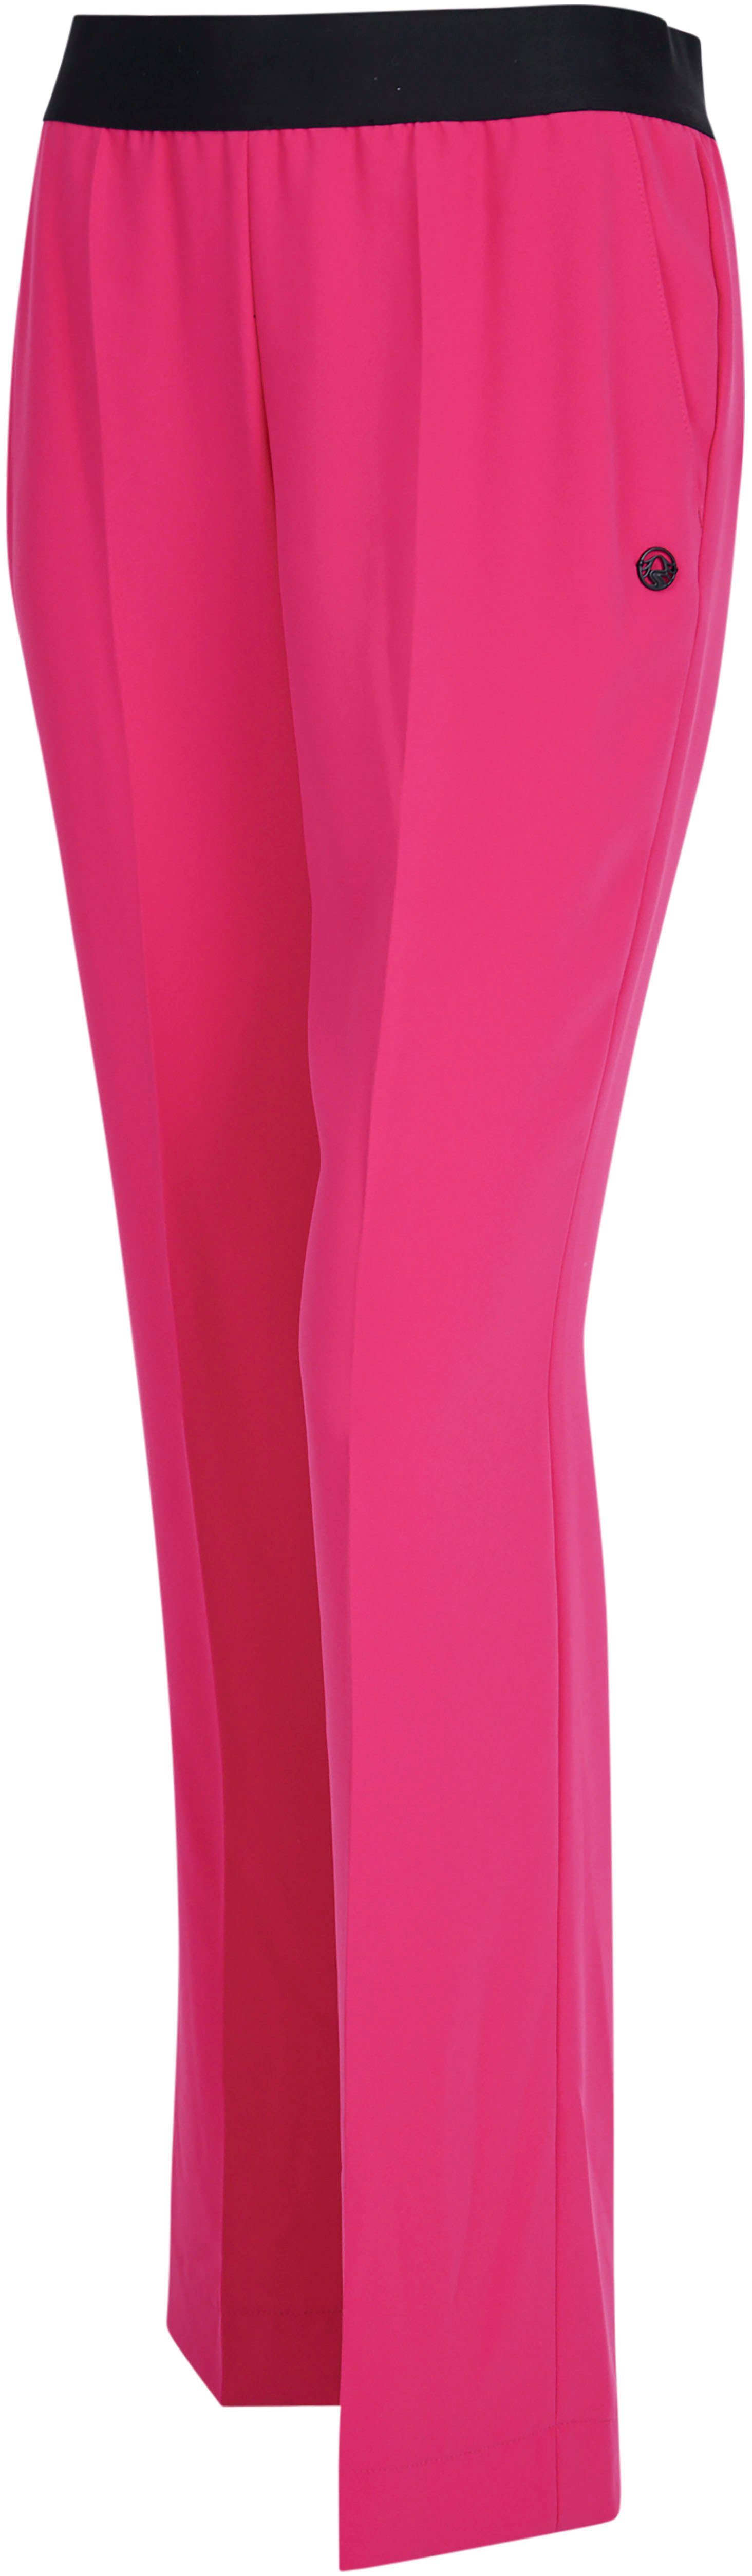 Sportalm Kitzbühel Anzughose Hose Candy Pink